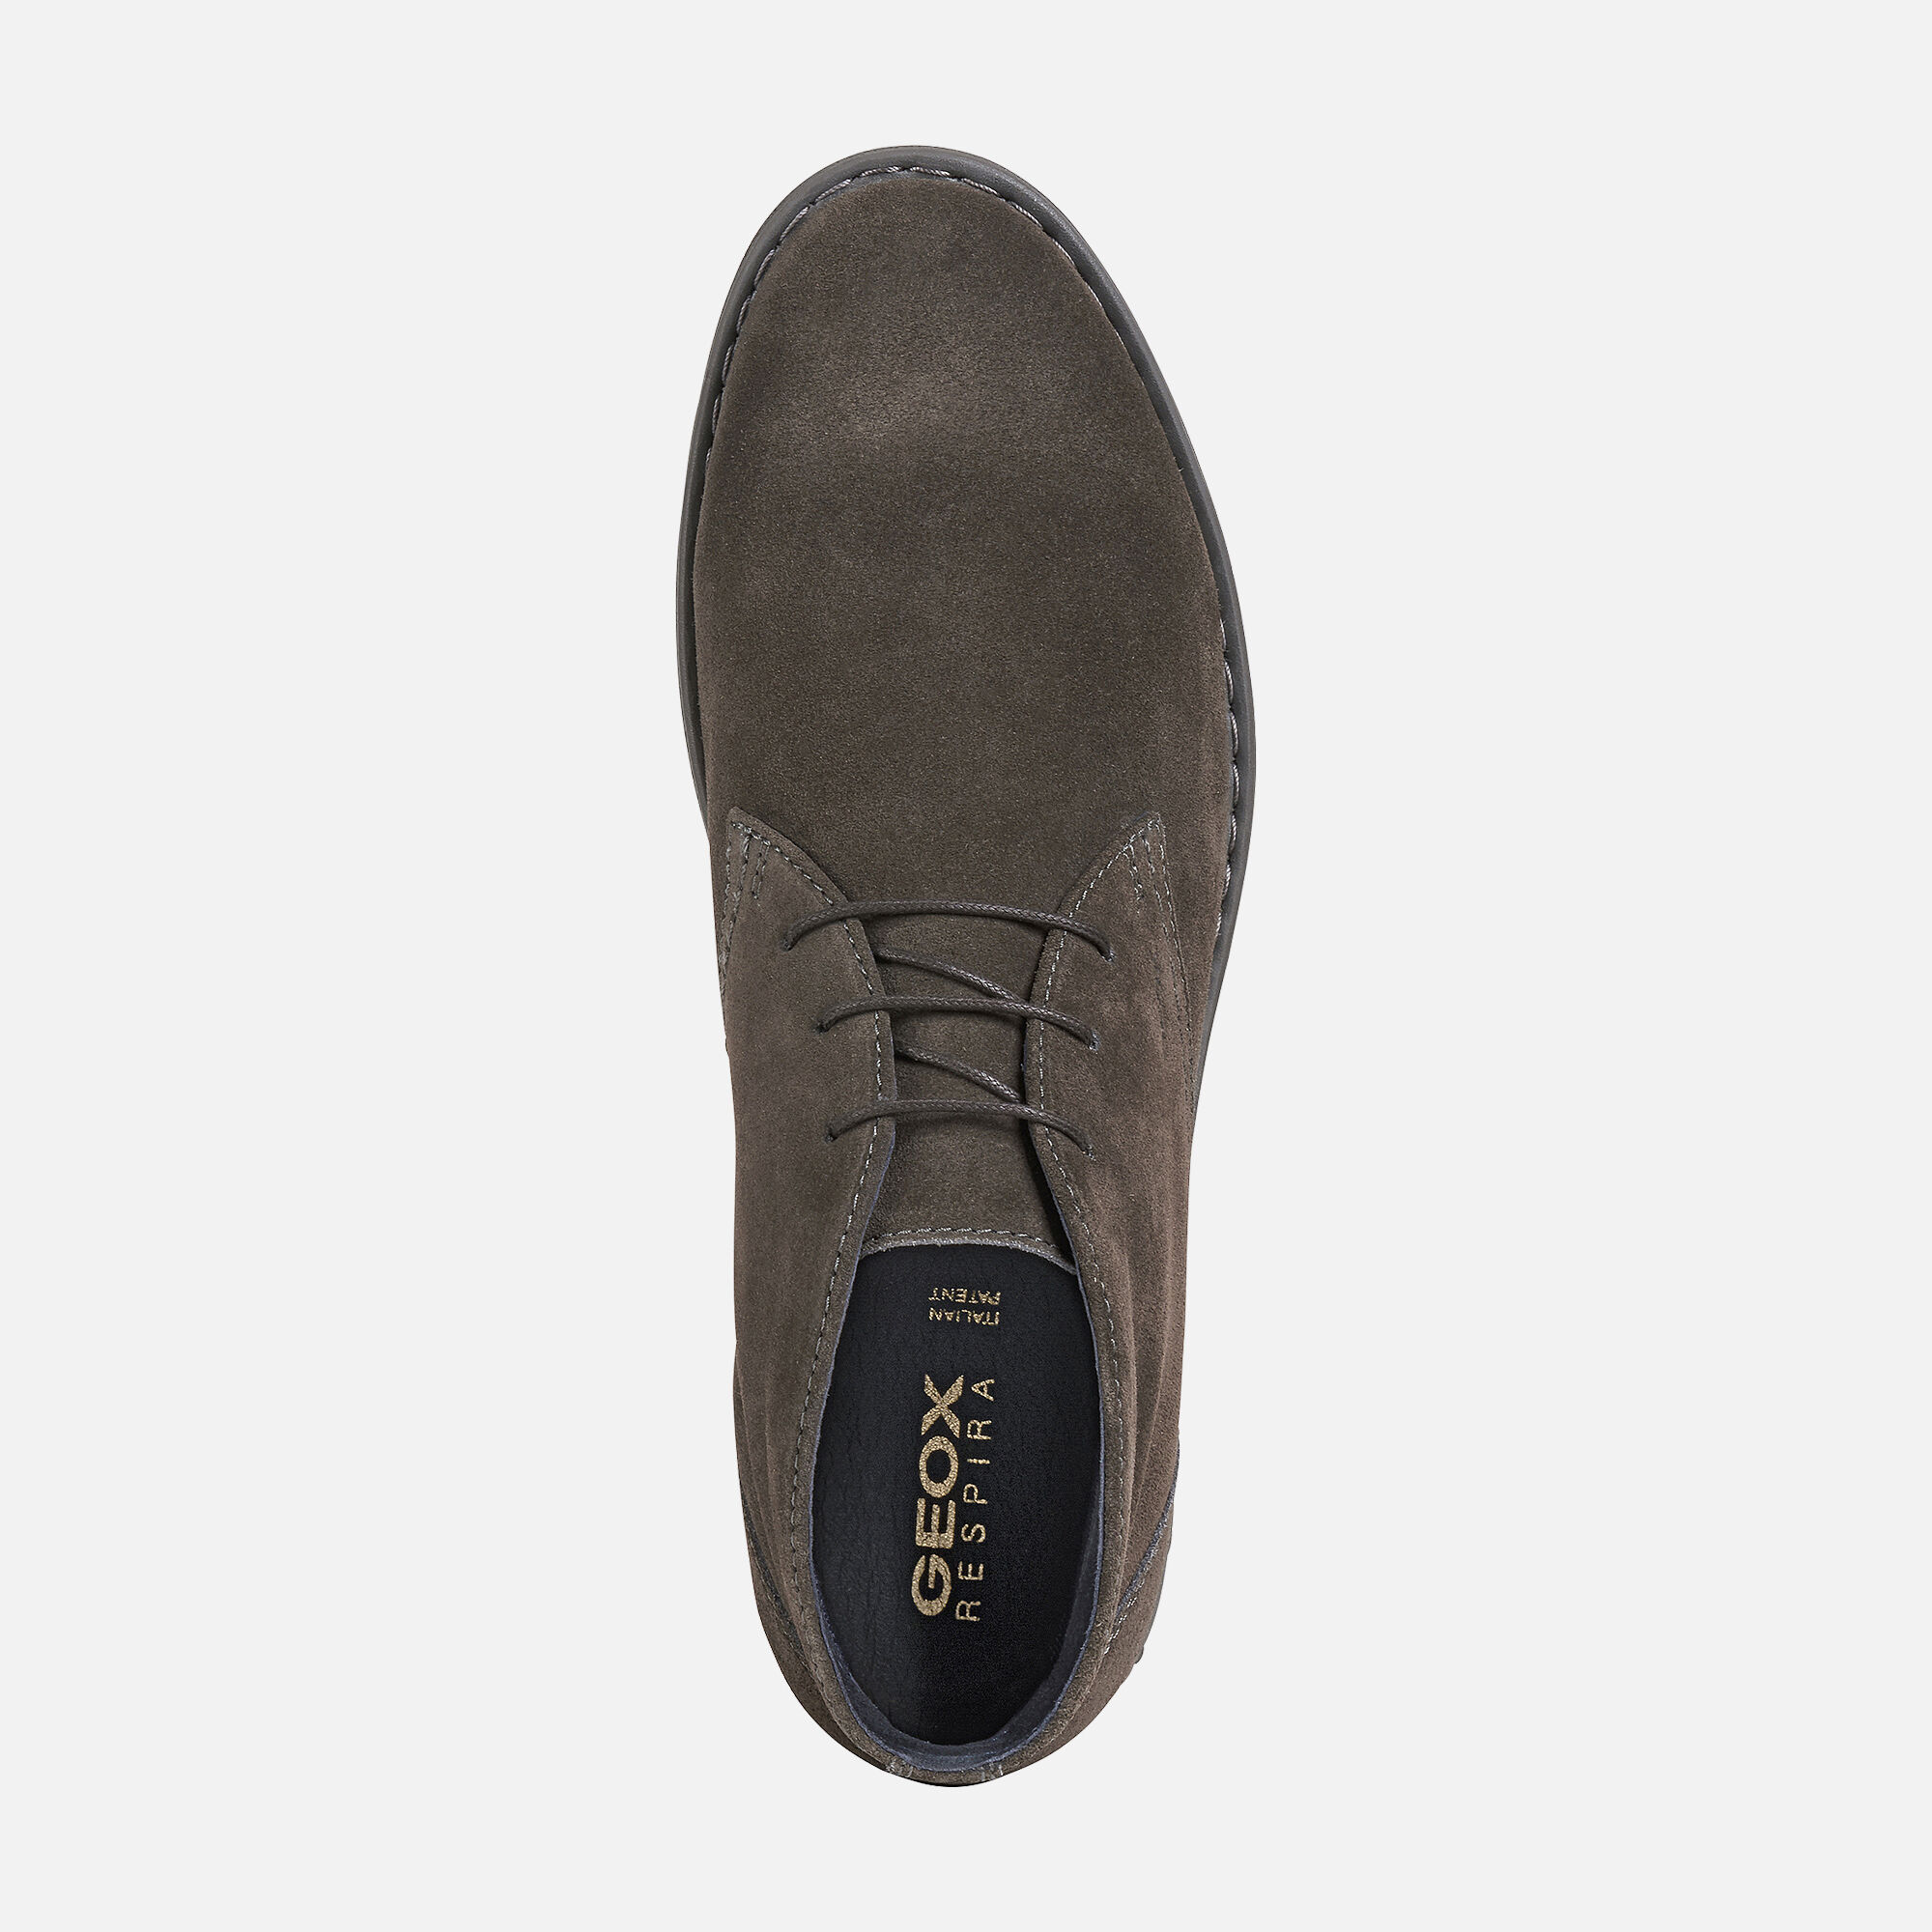 Geox BRANDLED Man: Mud Shoes | Geox® Entry Price